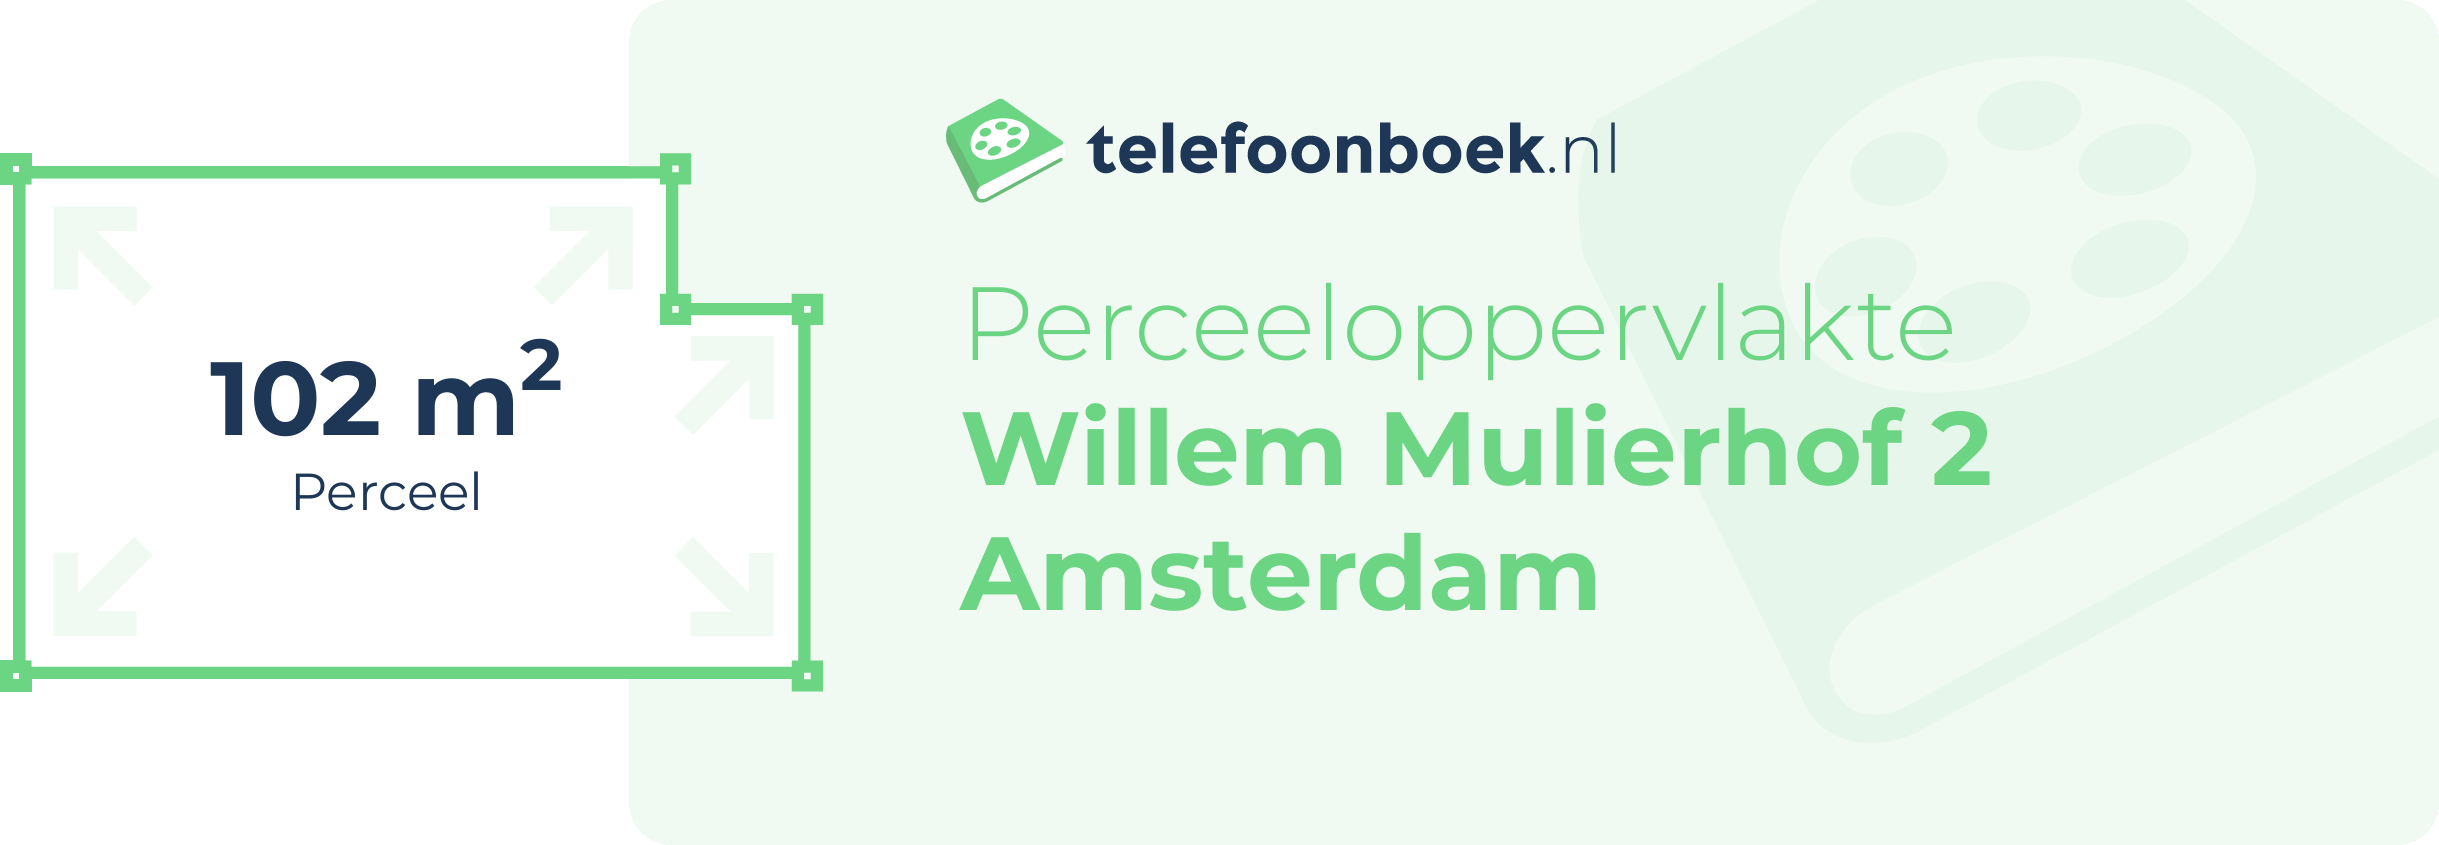 Perceeloppervlakte Willem Mulierhof 2 Amsterdam